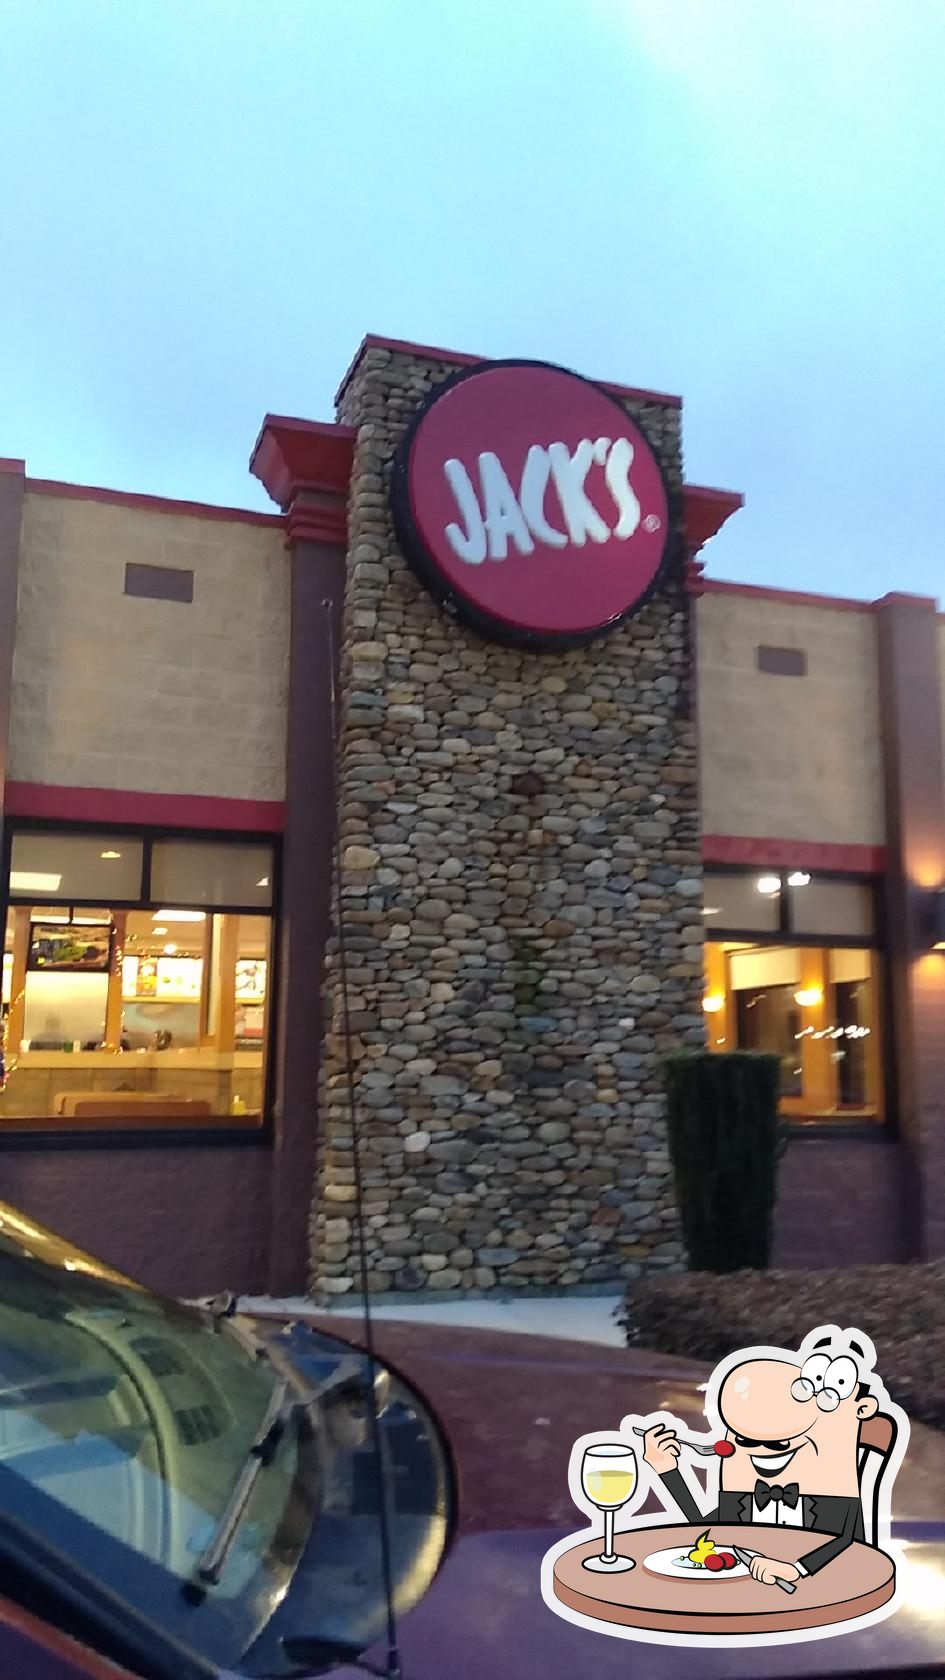 jack's restaurant menu tupelo ms